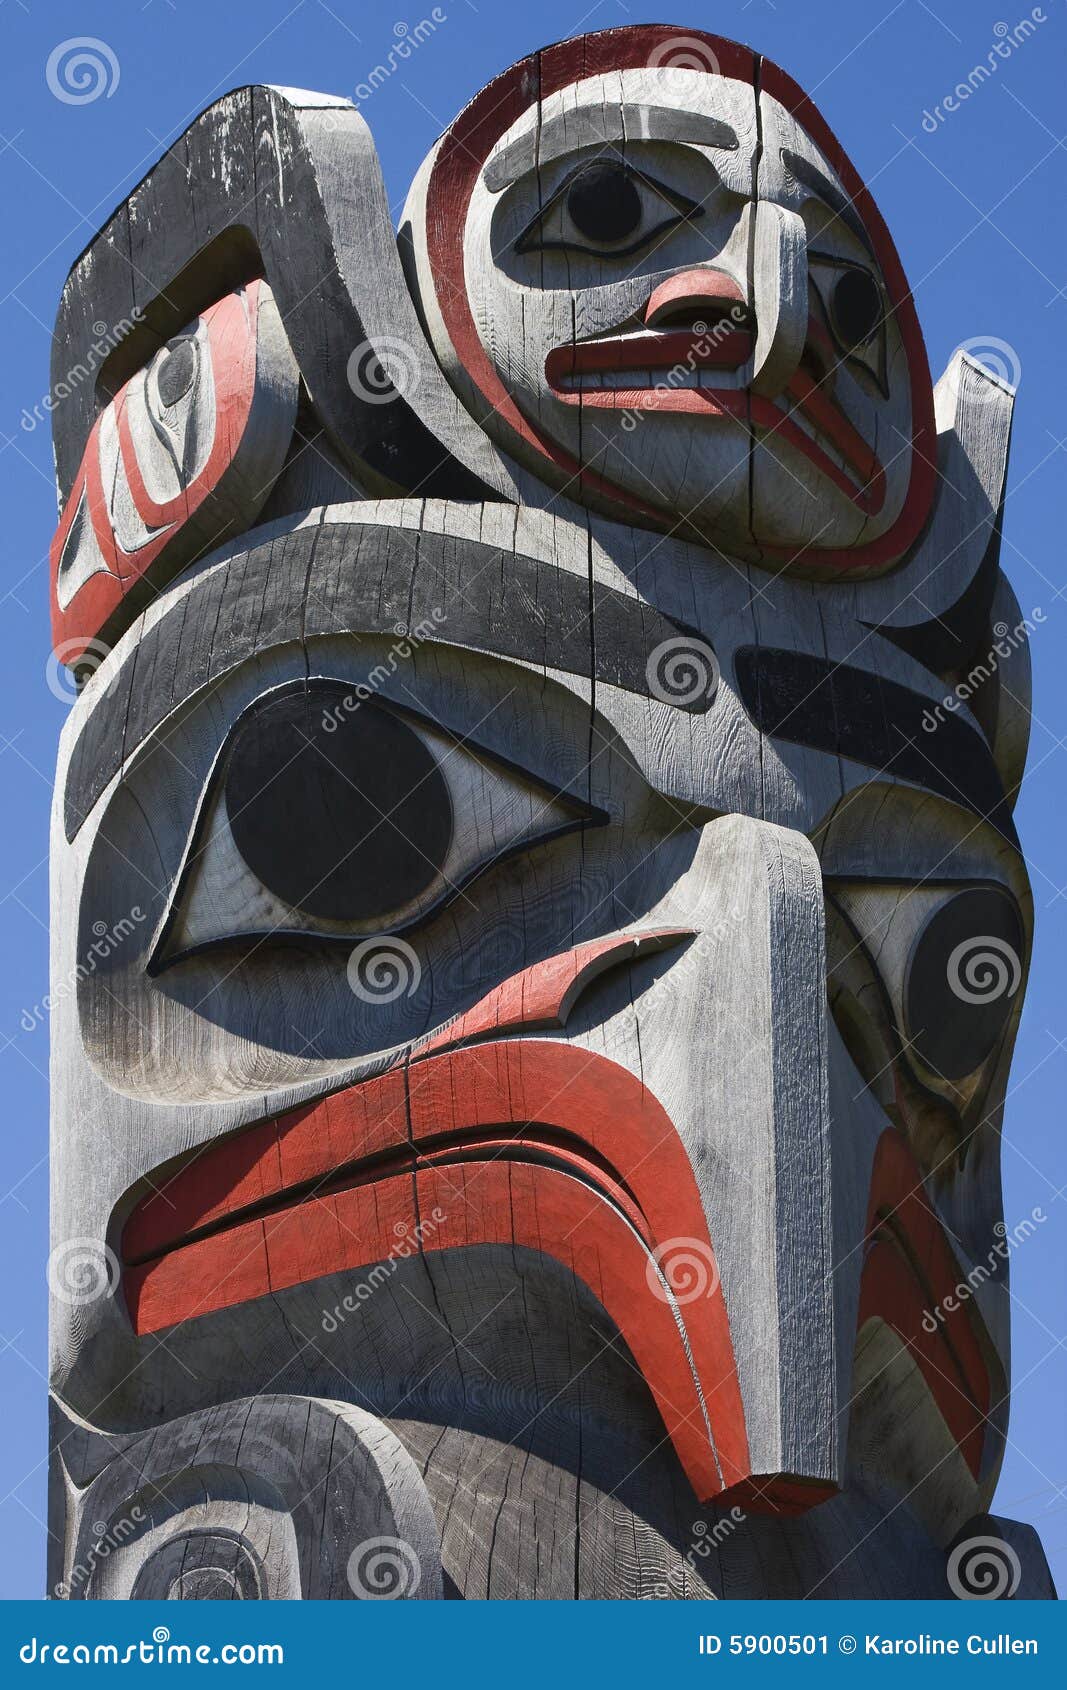 Haida Totem Pole Royalty-Free Stock Photography | CartoonDealer.com ...